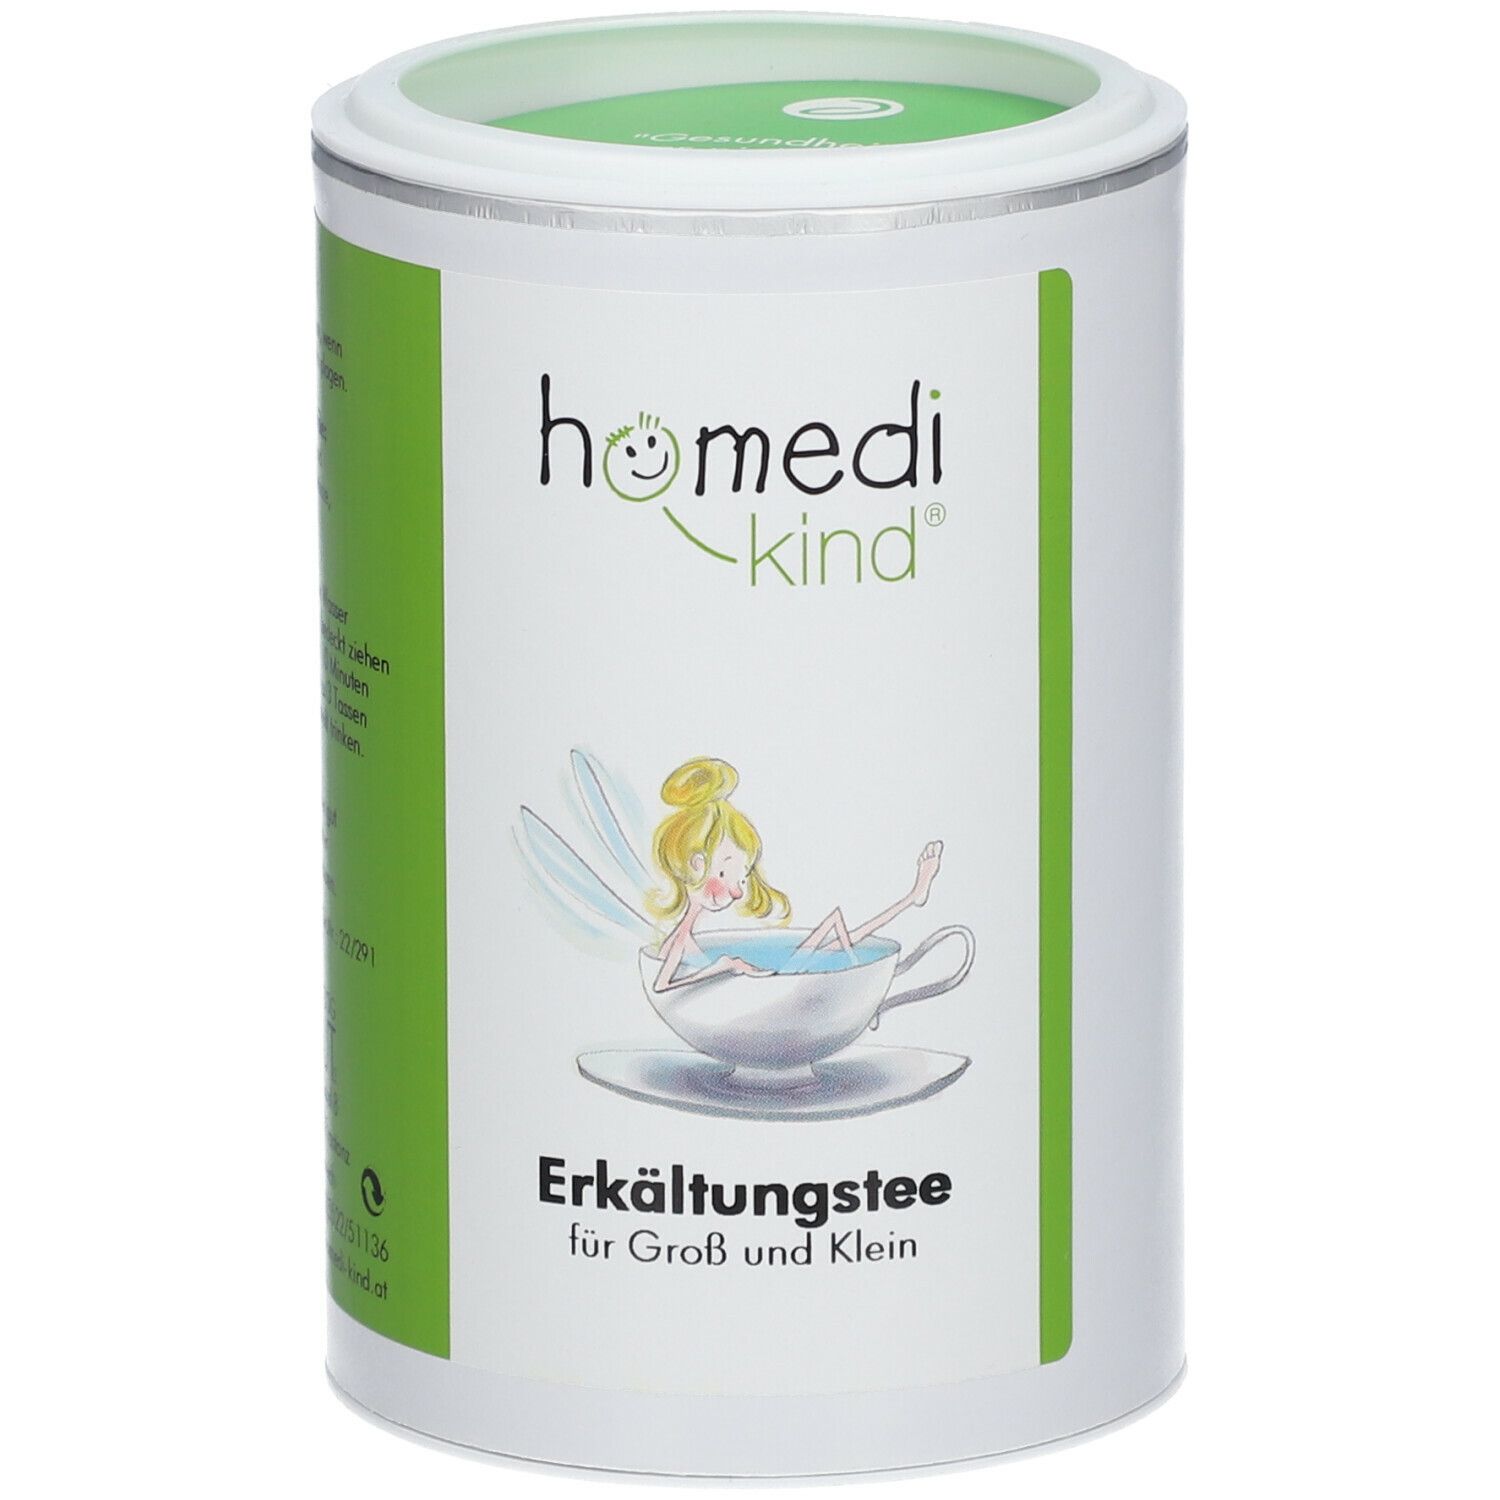 ECA-MEDICAL HANDELSGMBH homedi-kind® Erkältungstee